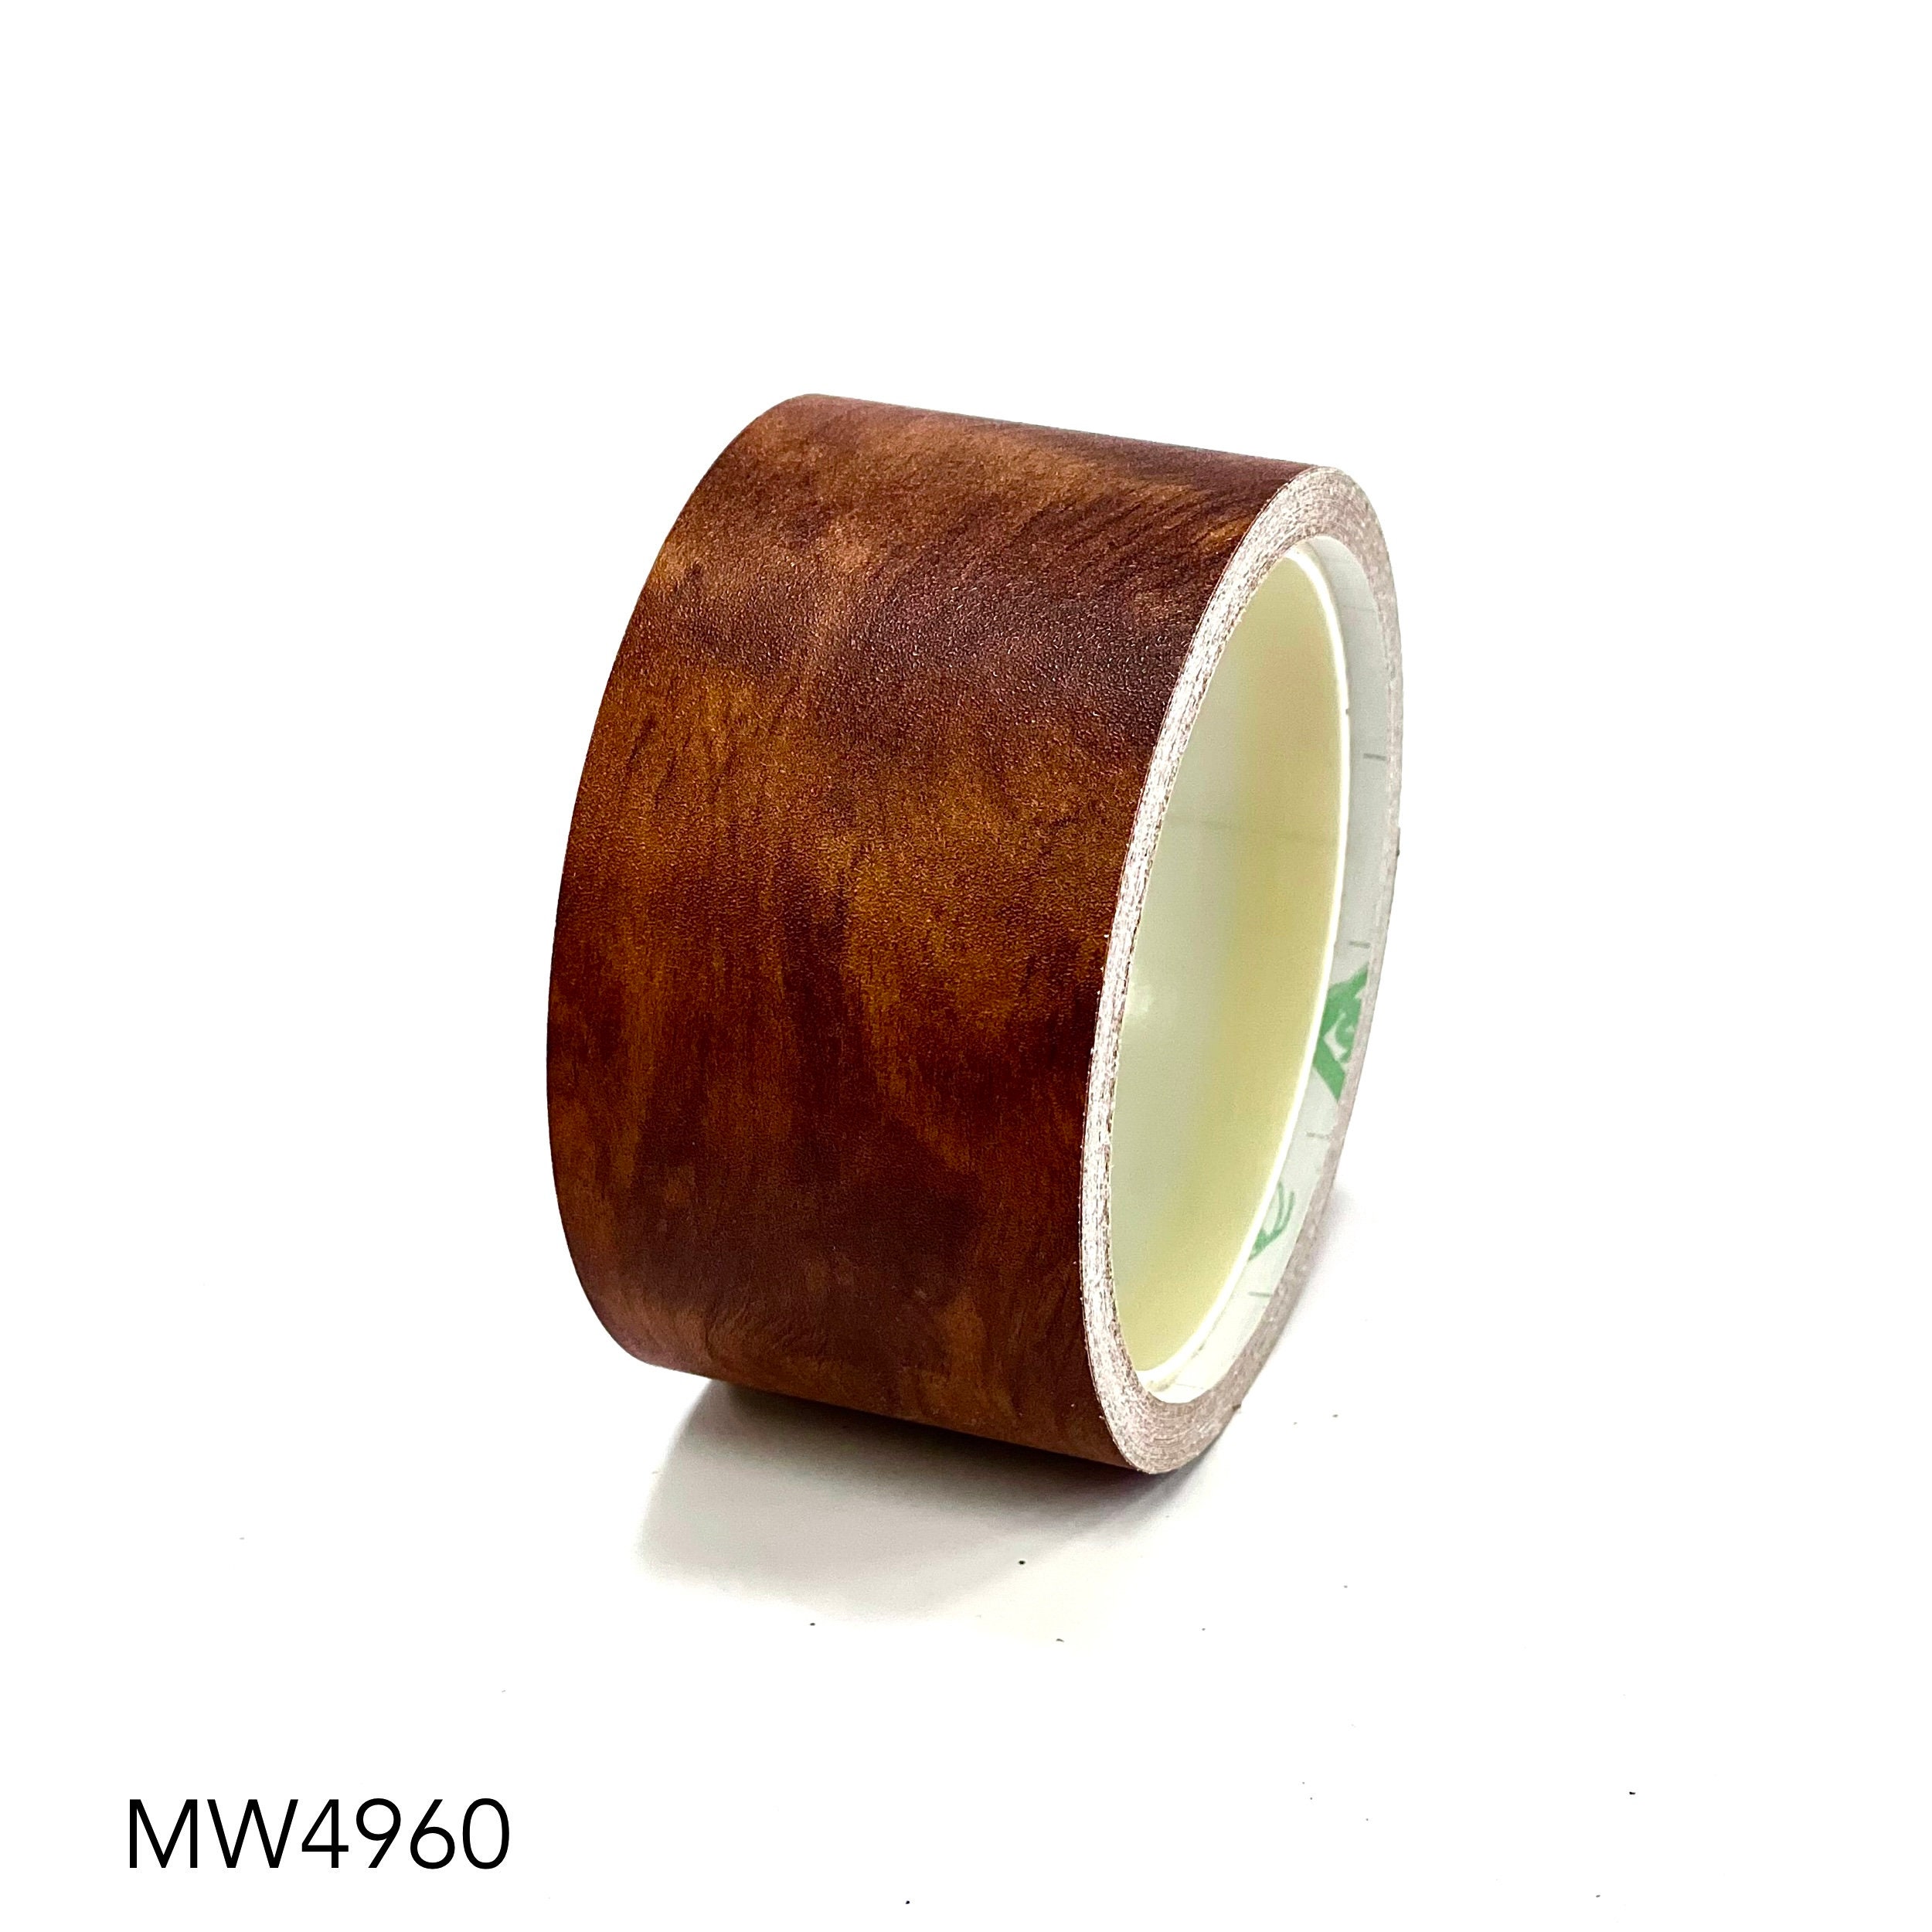 Wood Grain Duct Tape, Strong Self-adhesive Masking Tape, 5 Meter